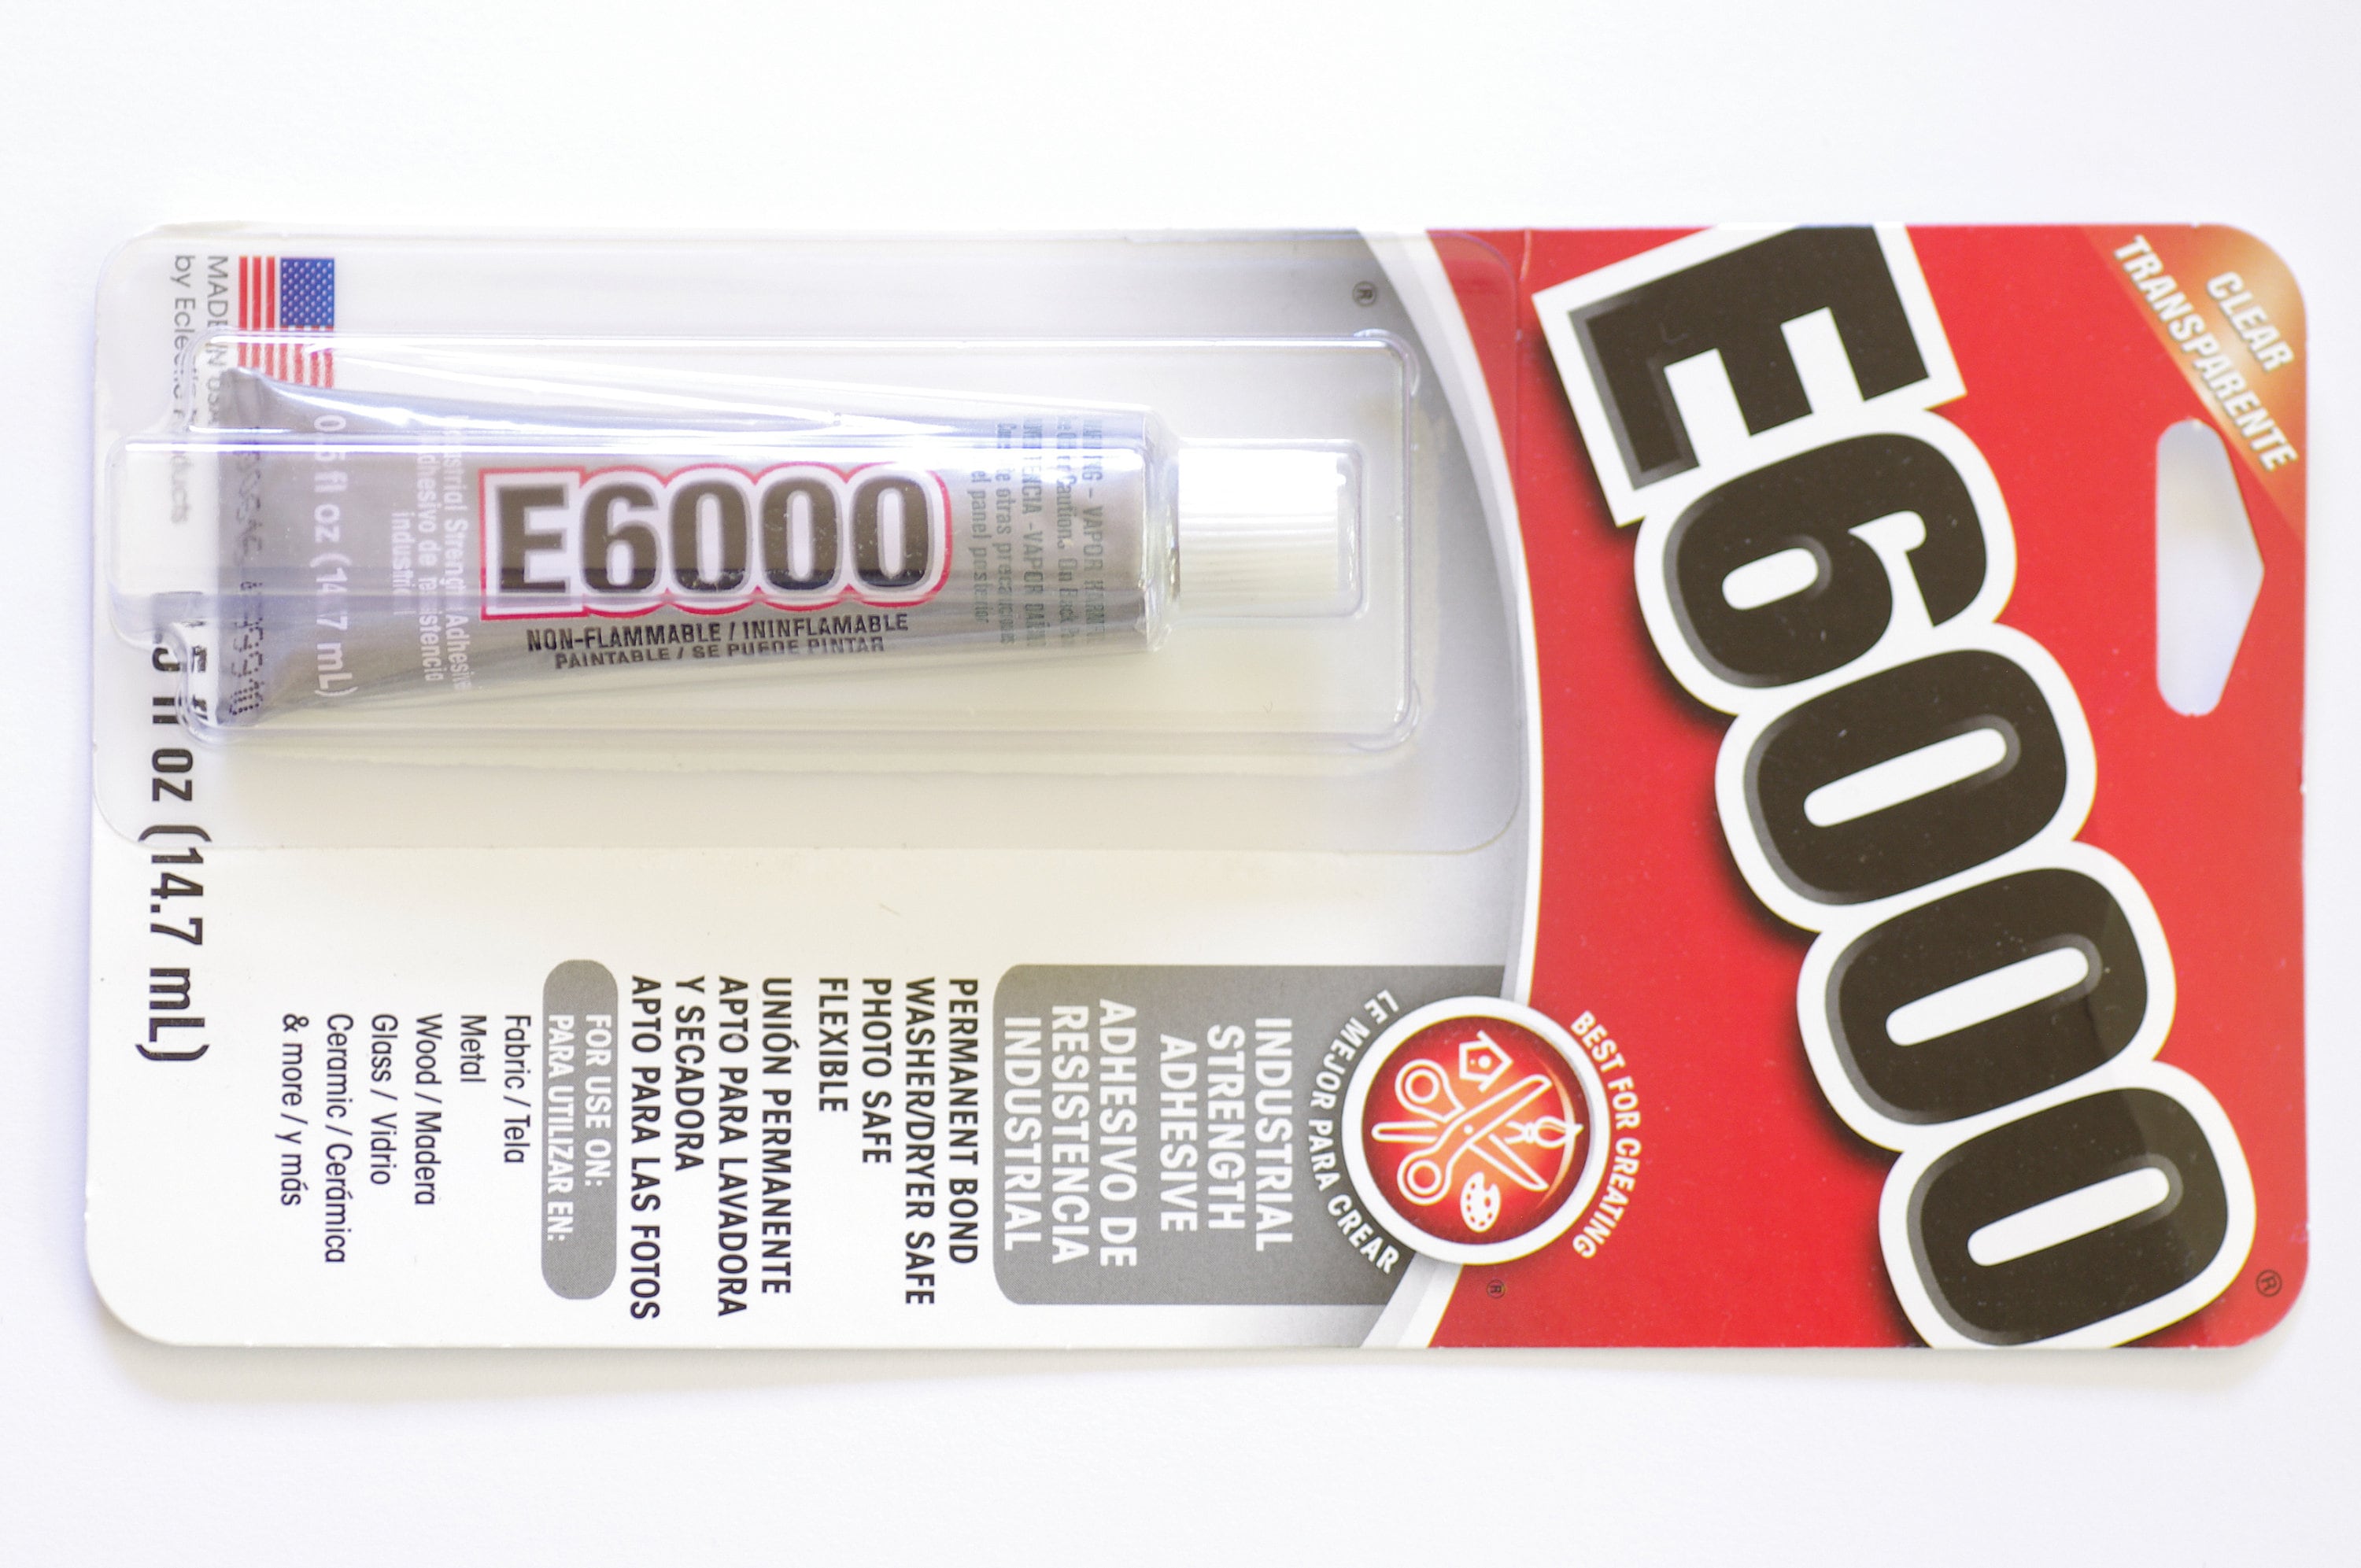 Buy E6000 FABRI-FUSE 565004 Glue, Clear/Cloudy White, 4 fl-oz